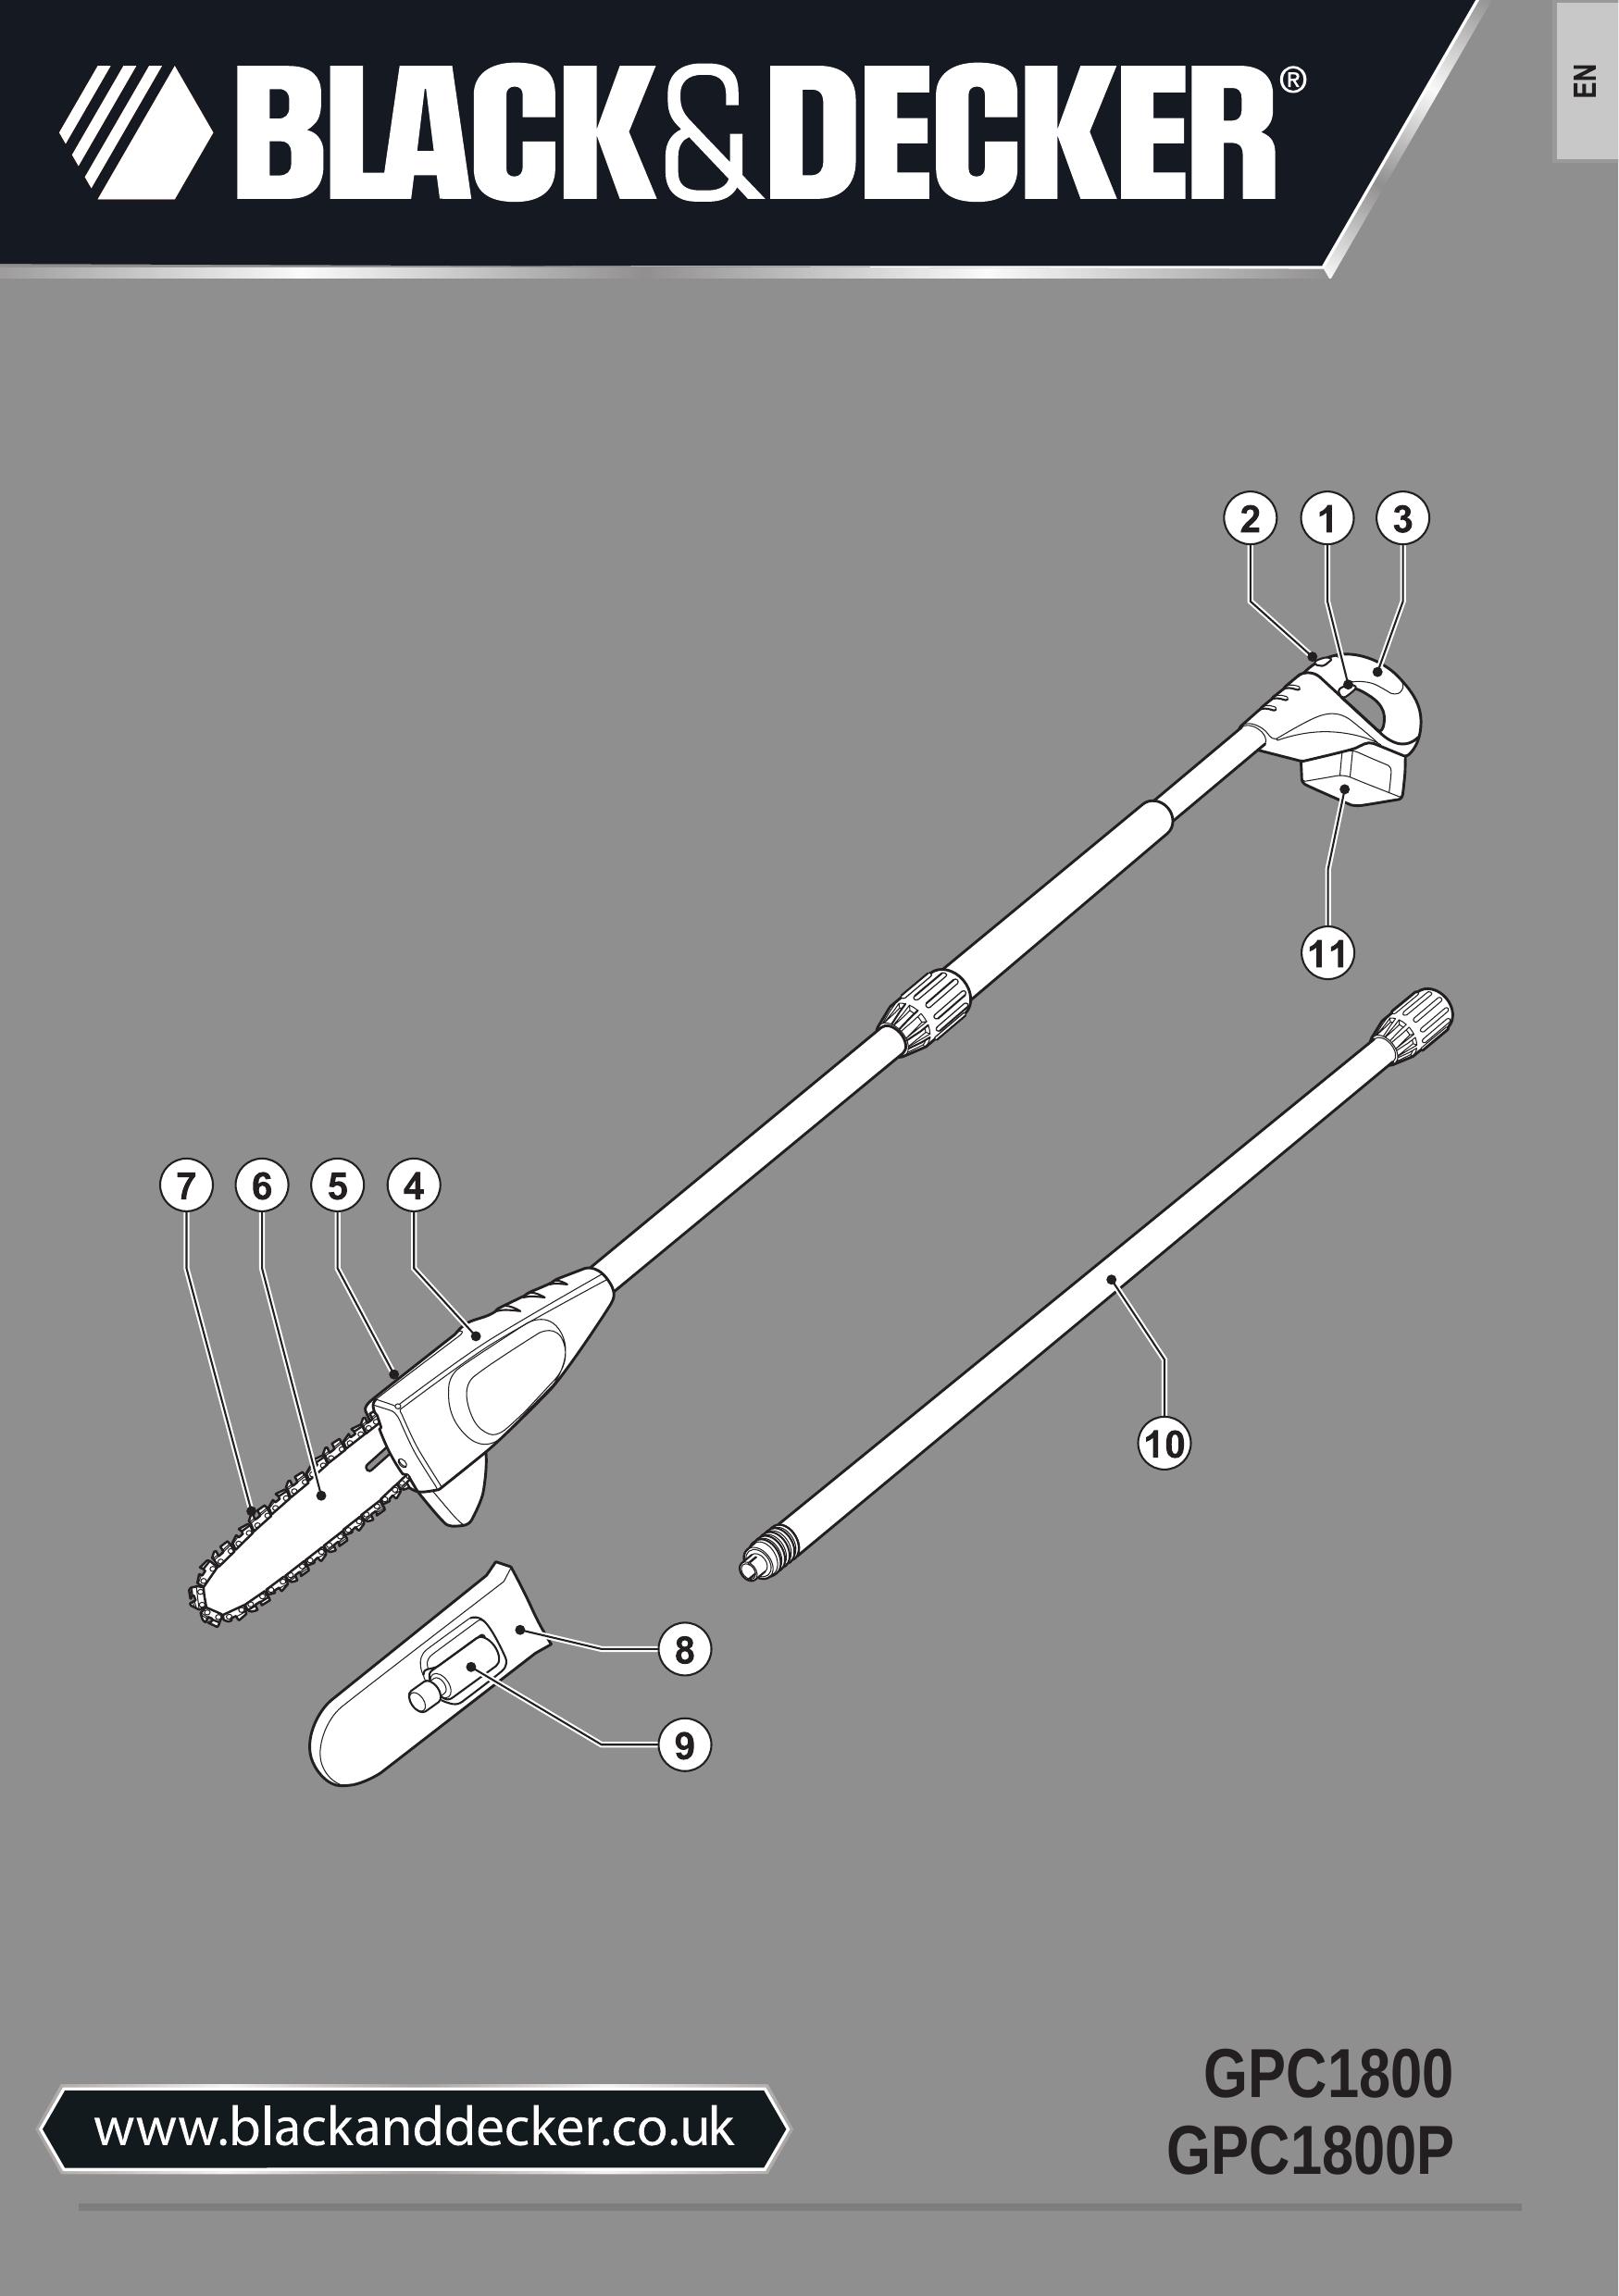 Black & Decker GPC1800 Pole Saw User Manual